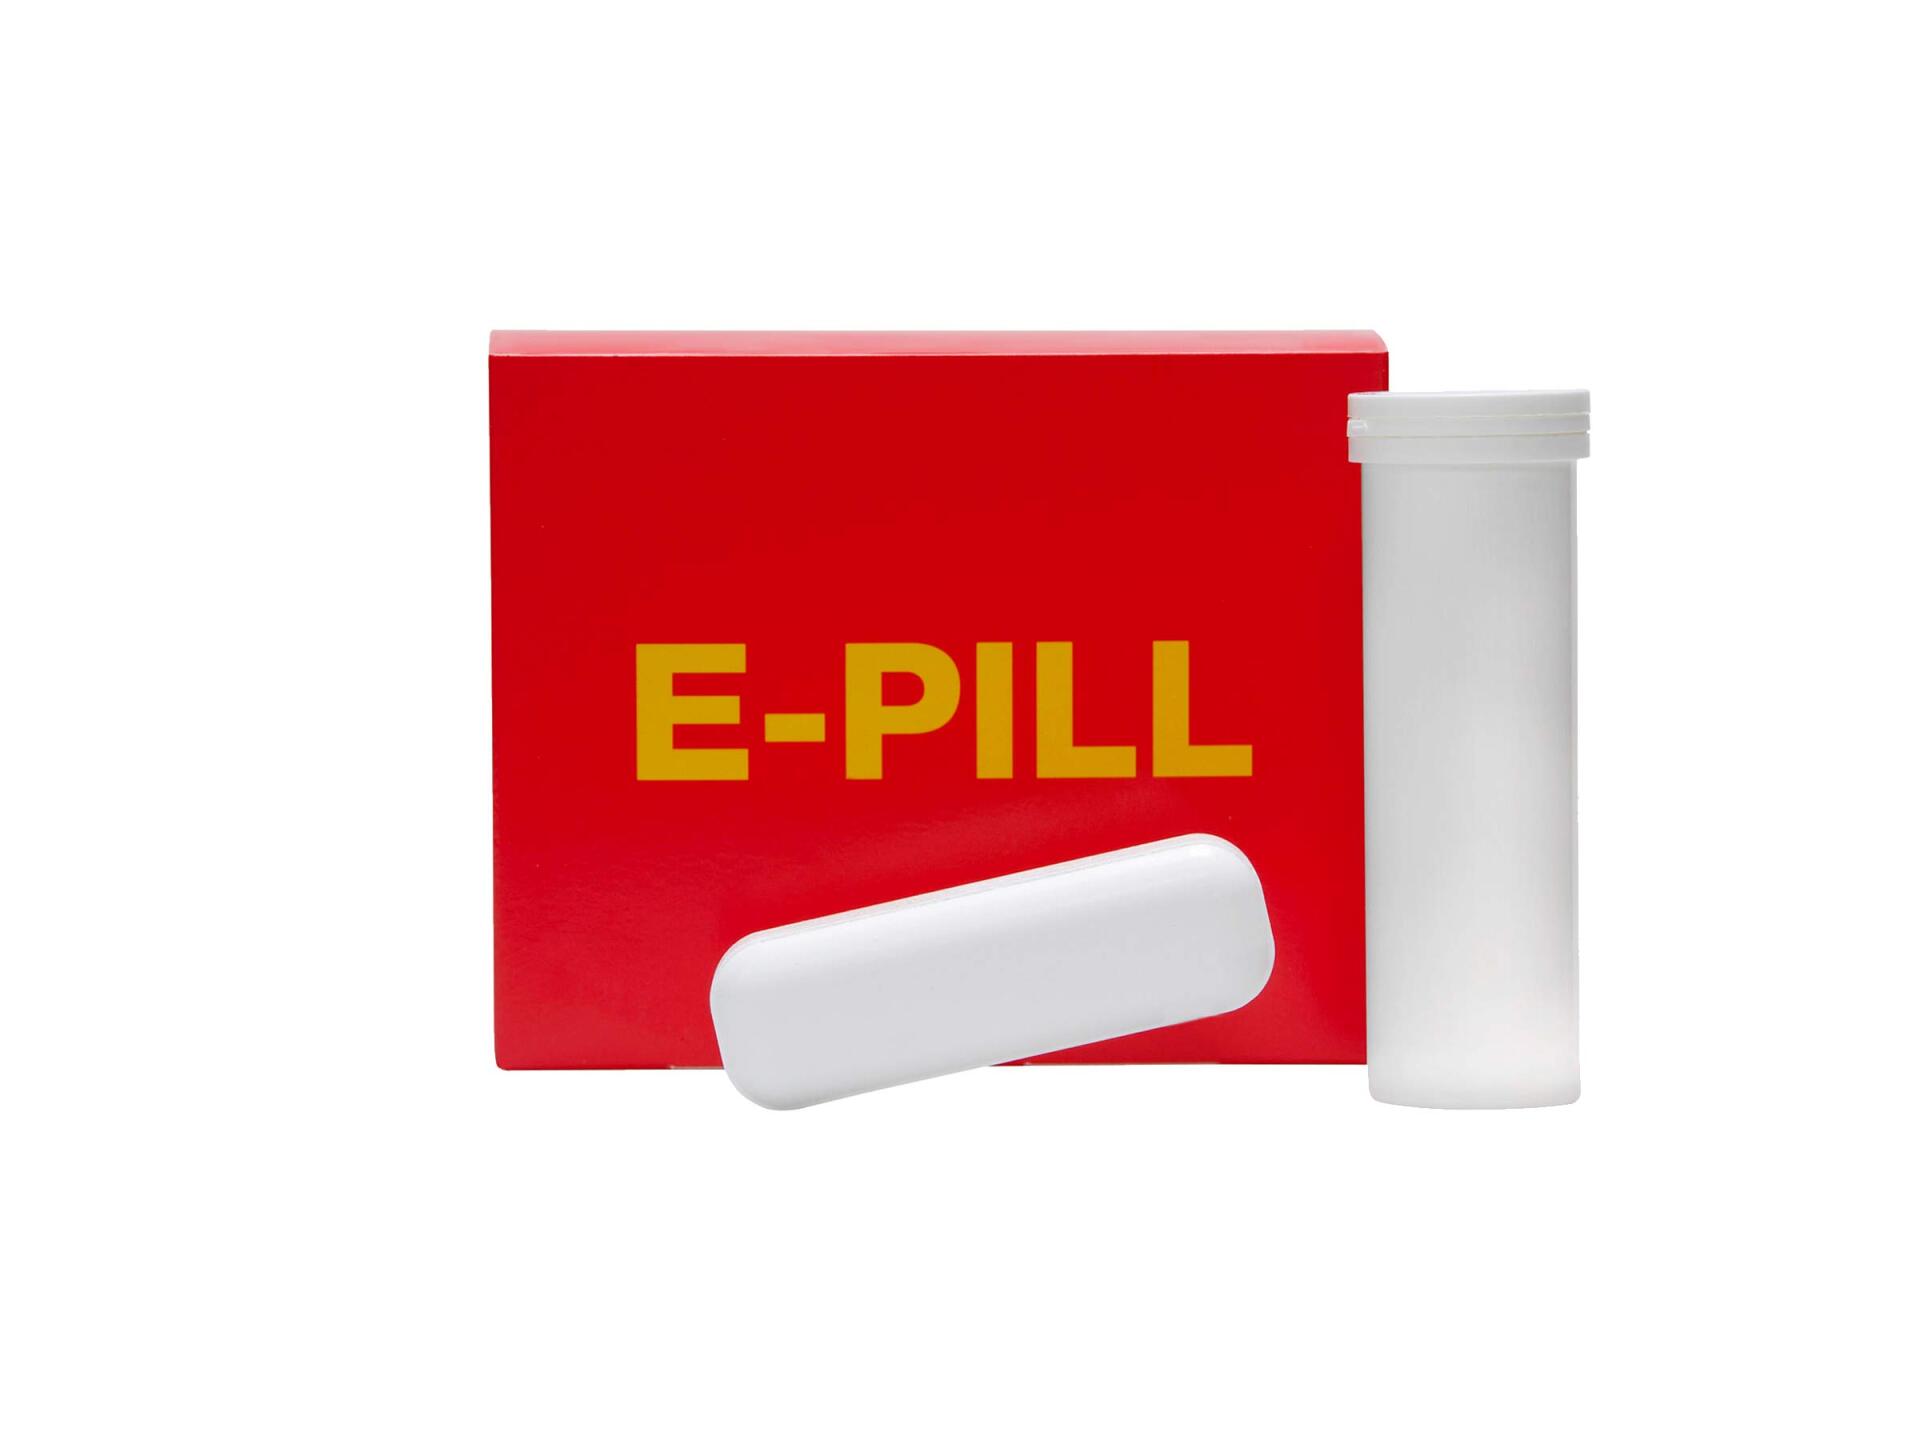 Energie-Pillle, E-Pill, Ketose Rind, Ketose Milchkuh, Ketose Rind behandlung